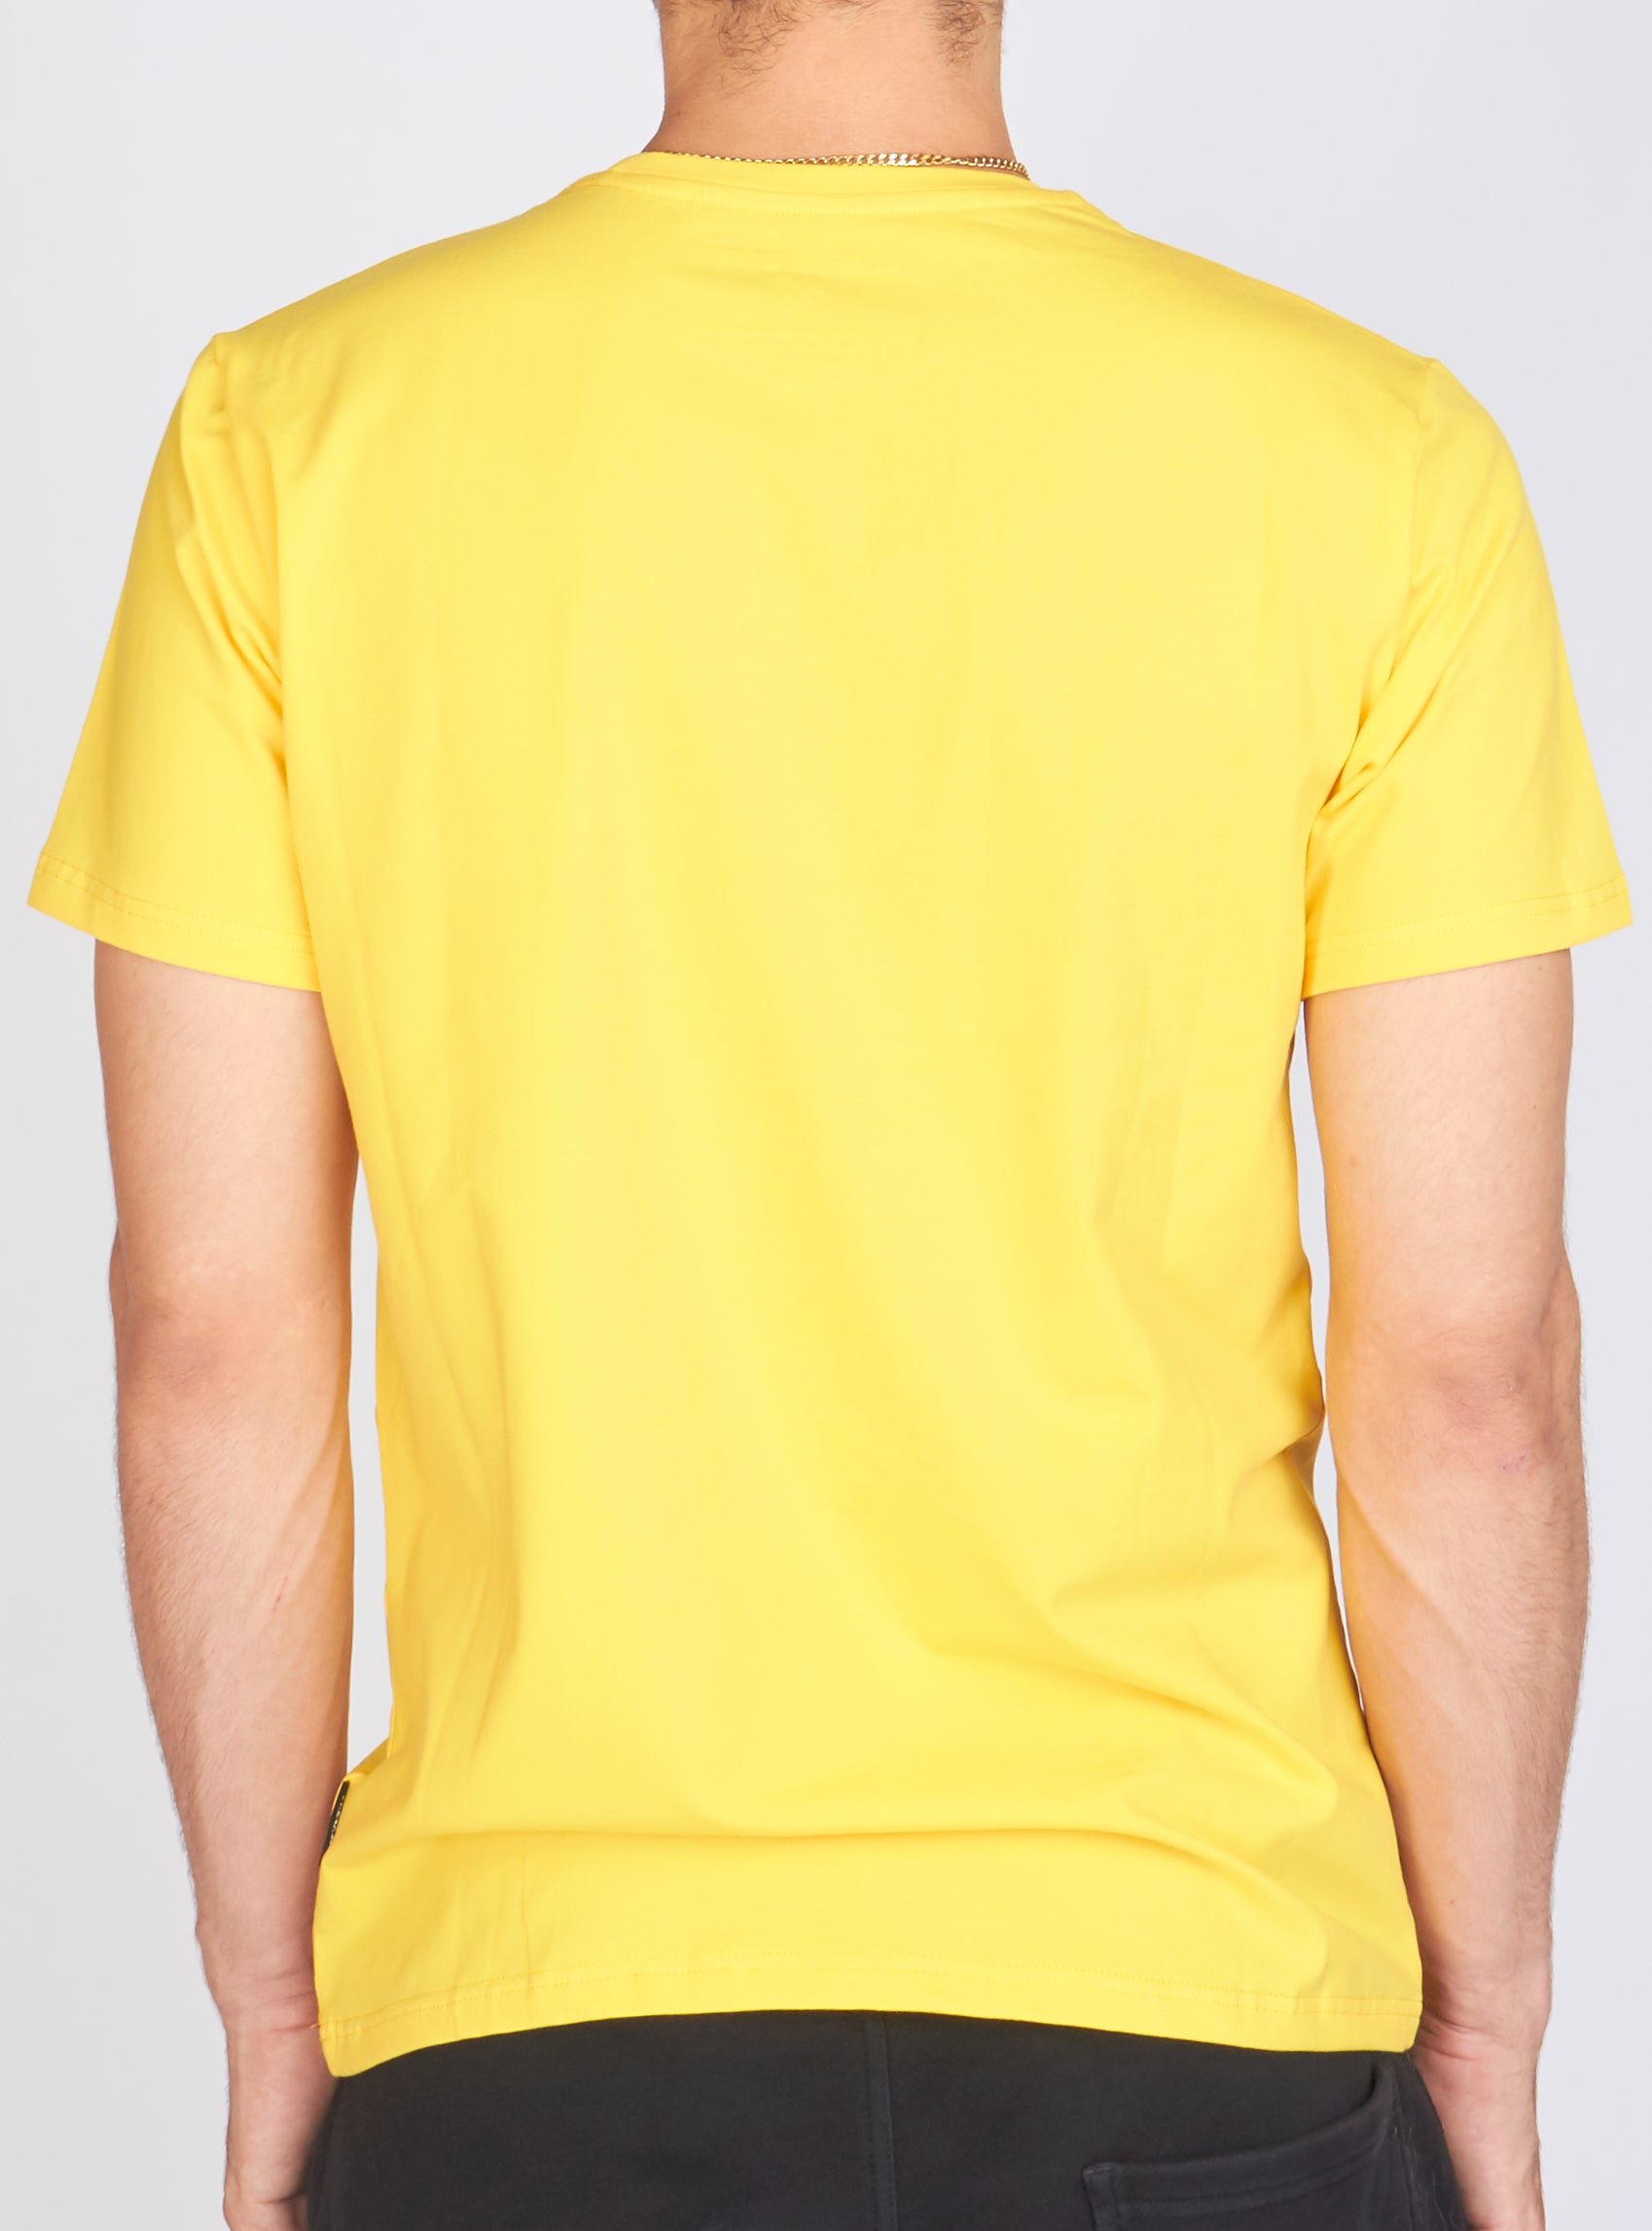 Locked & Loaded T-Shirt - Heavy Hitta - Black and Purple on Yellow - 102